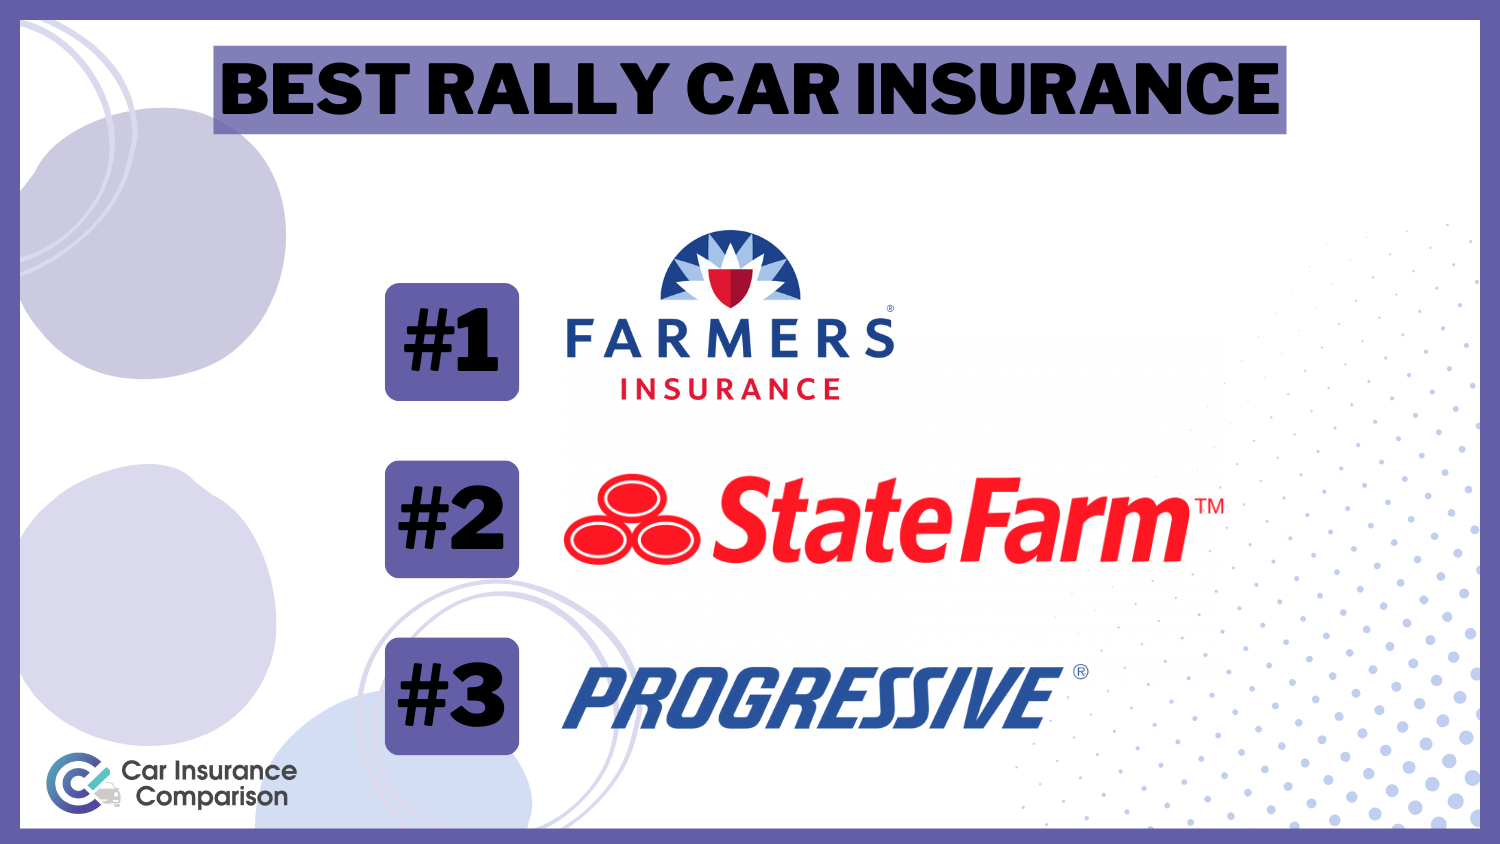 Best Rally Car Insurance: Farmers, State Farm, and Progressive